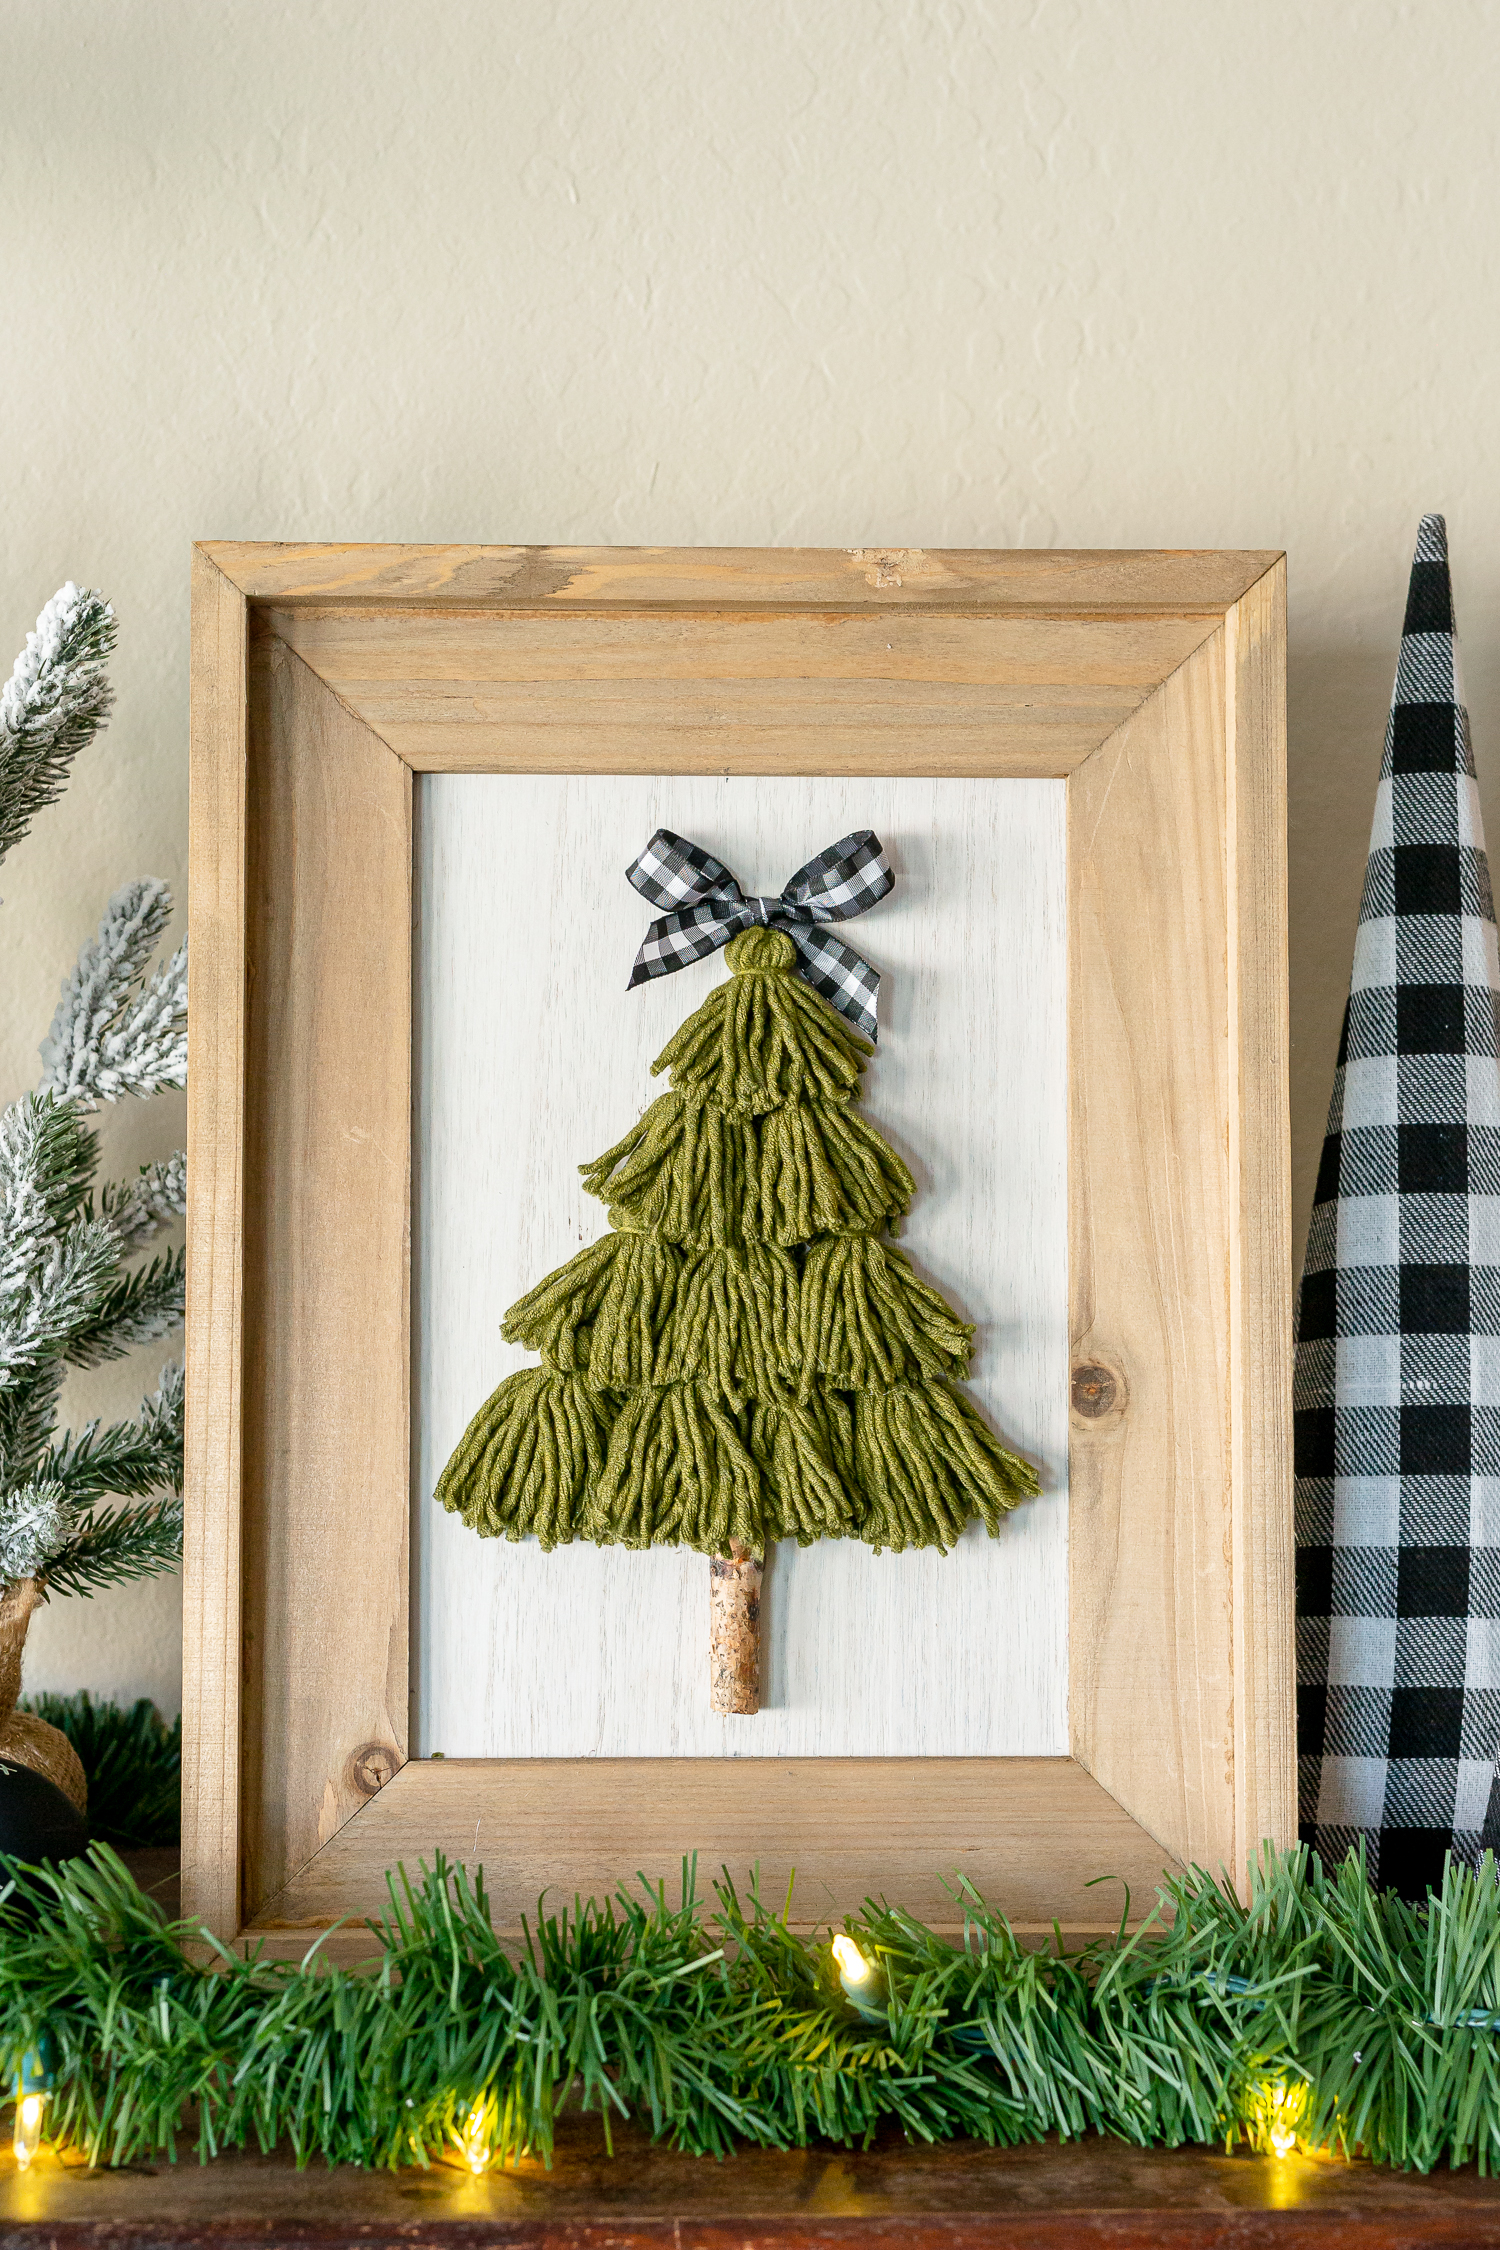 Tassel Tree Craft on shelf with greenery lights, and Christmas decor